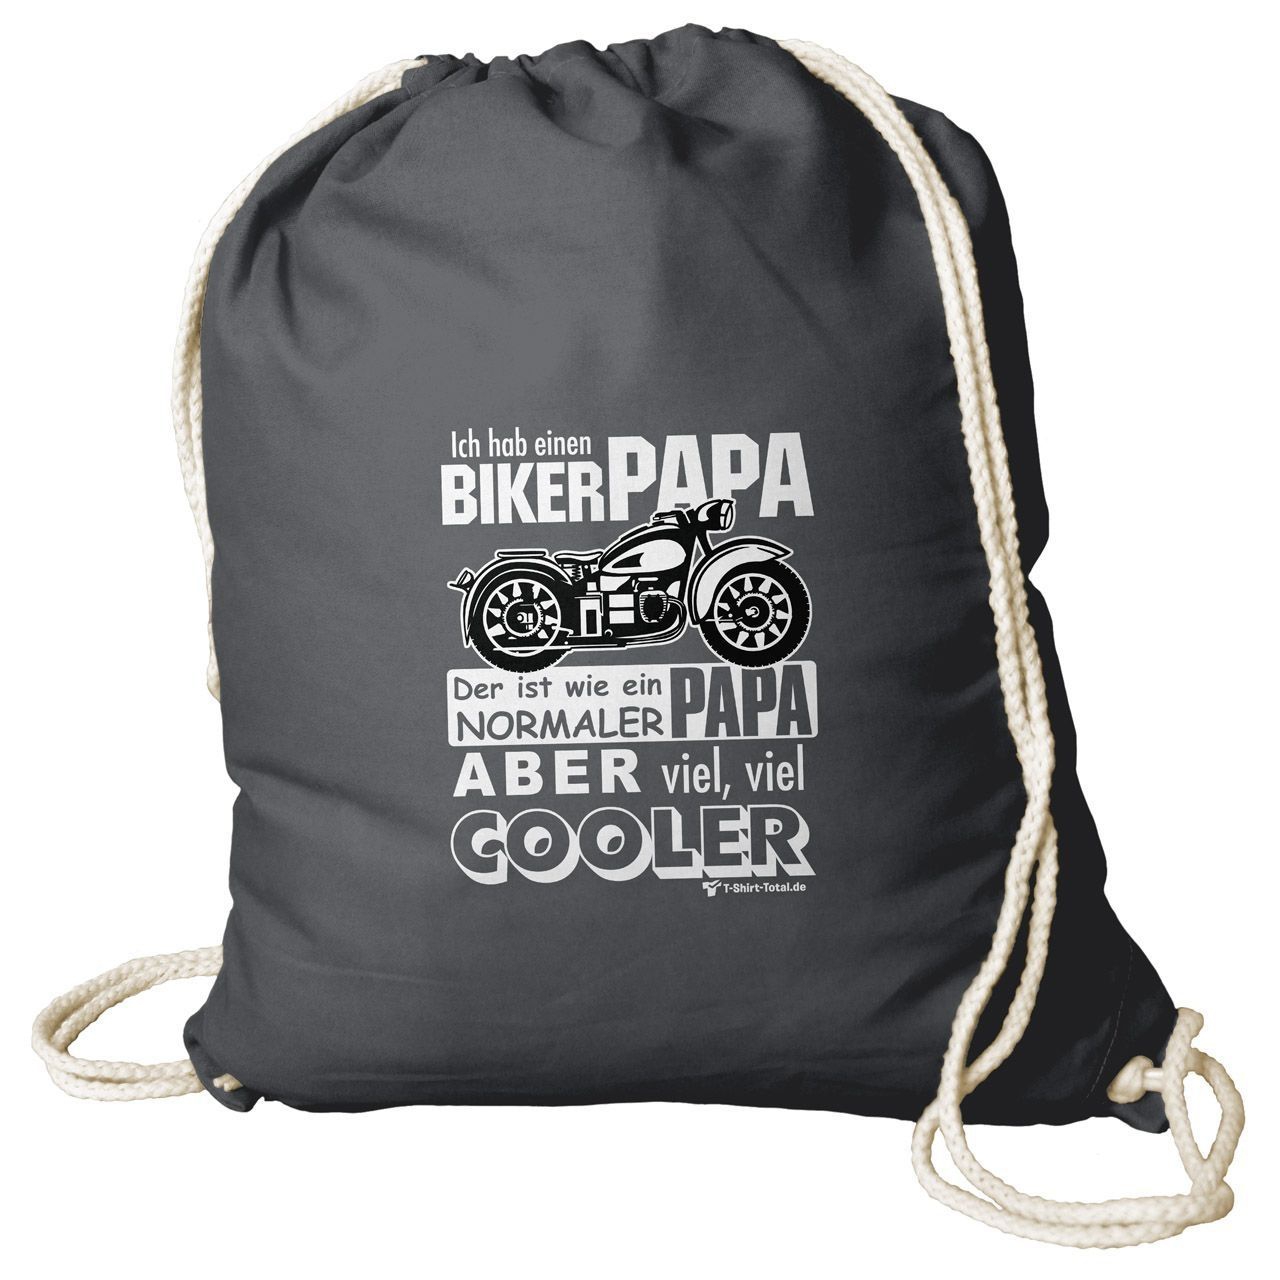 Biker Papa Rucksack Beutel grau